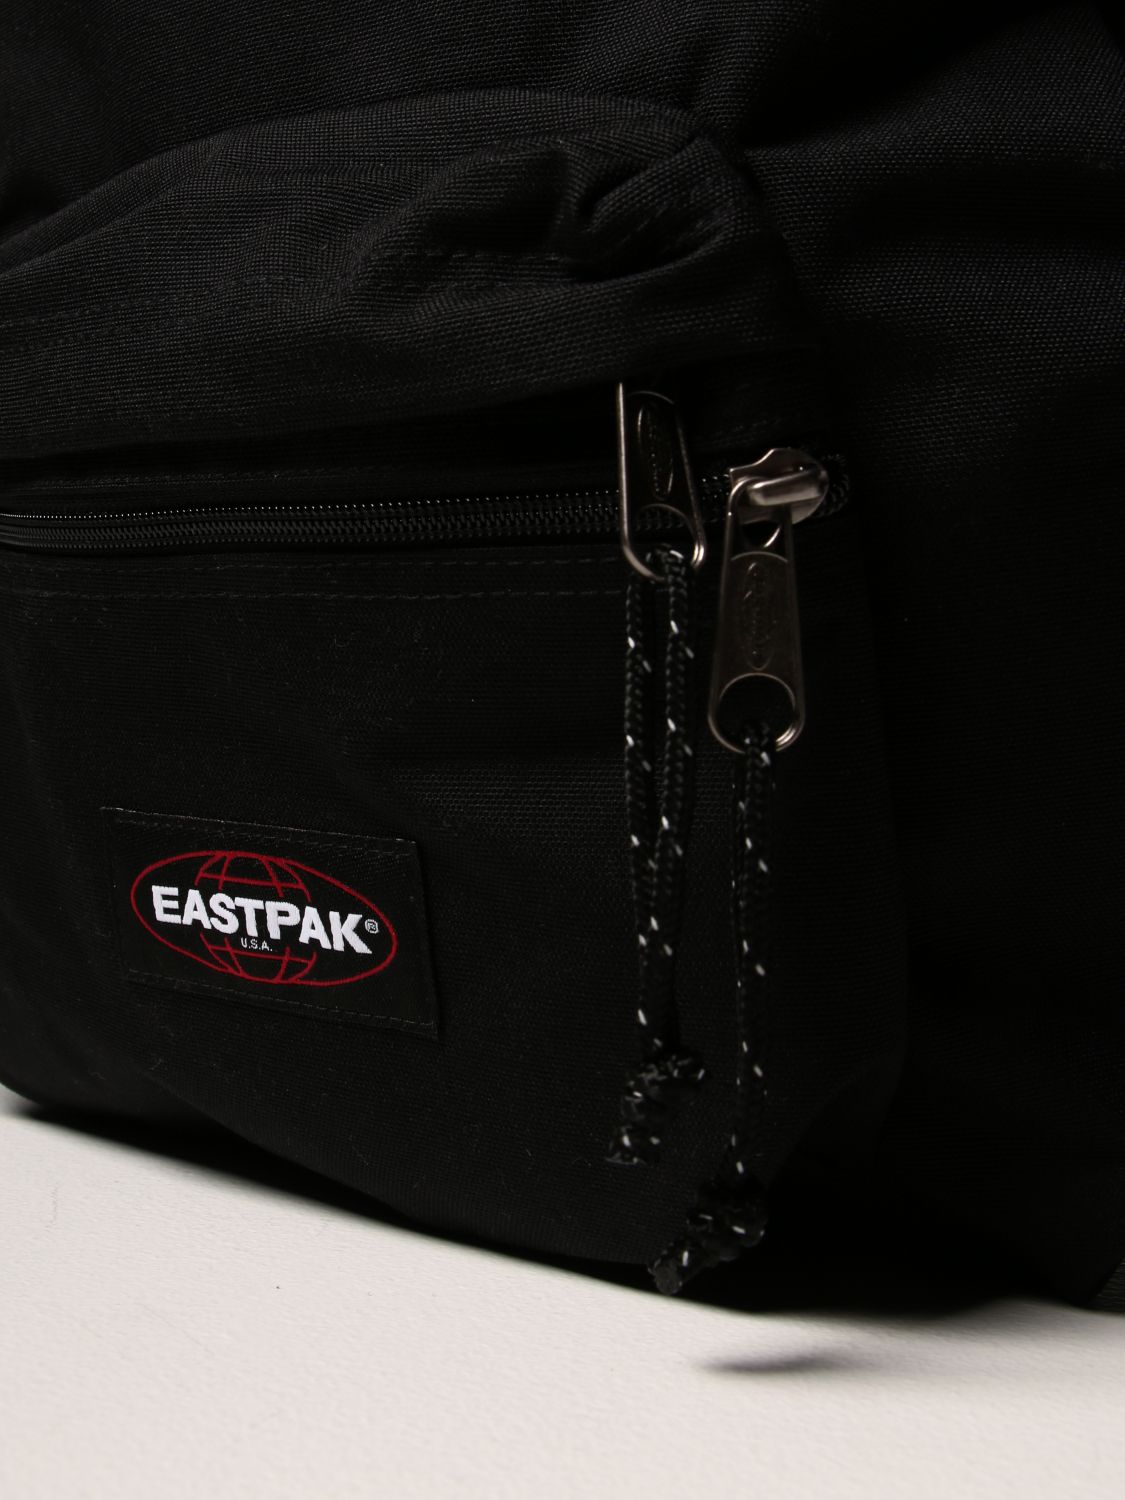 Rucksack Eastpak: Tasche herren Eastpak schwarz 3